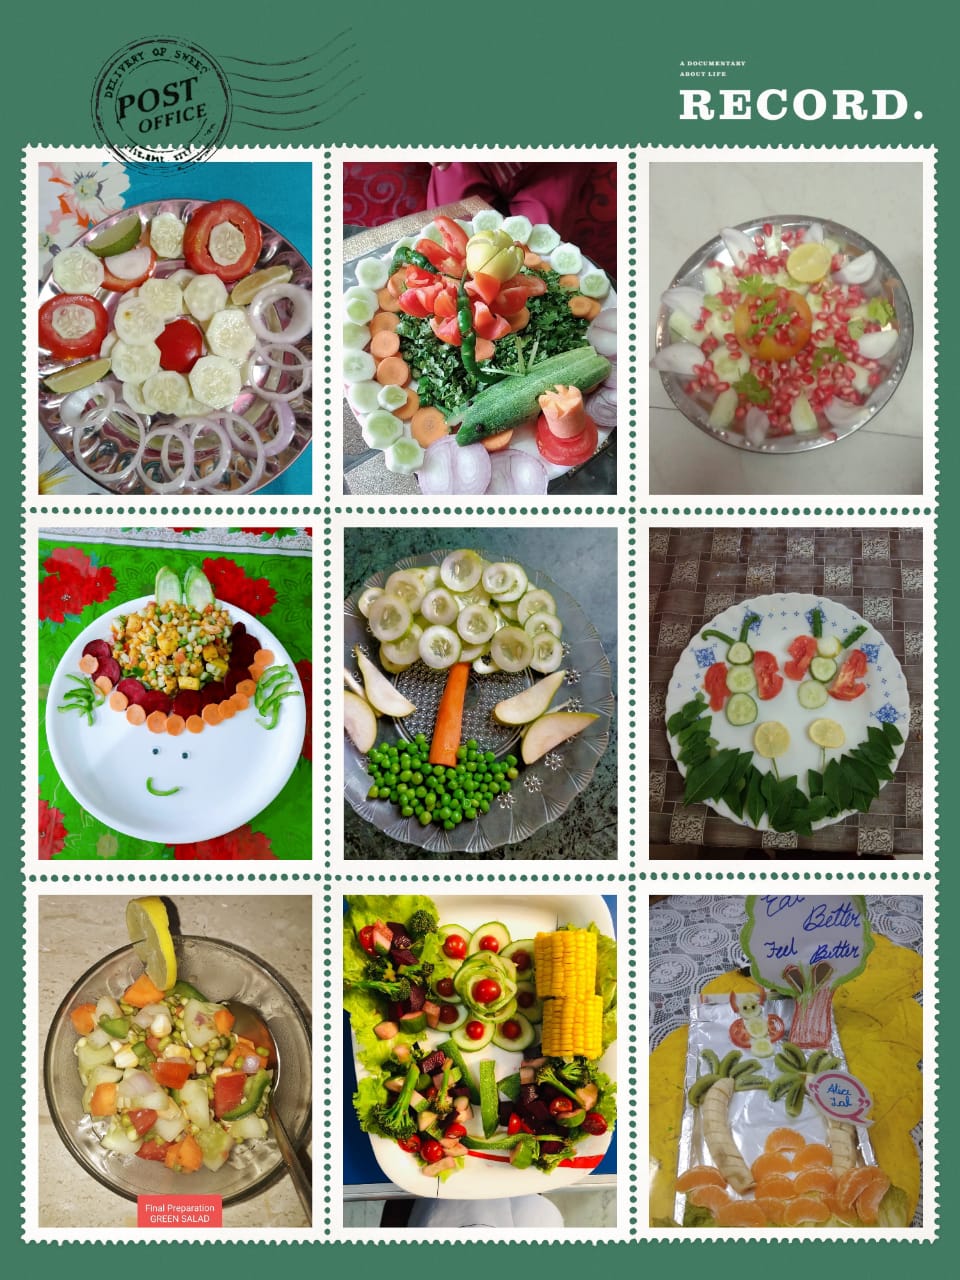 'Mixed Green' Salad Making for classes I - II